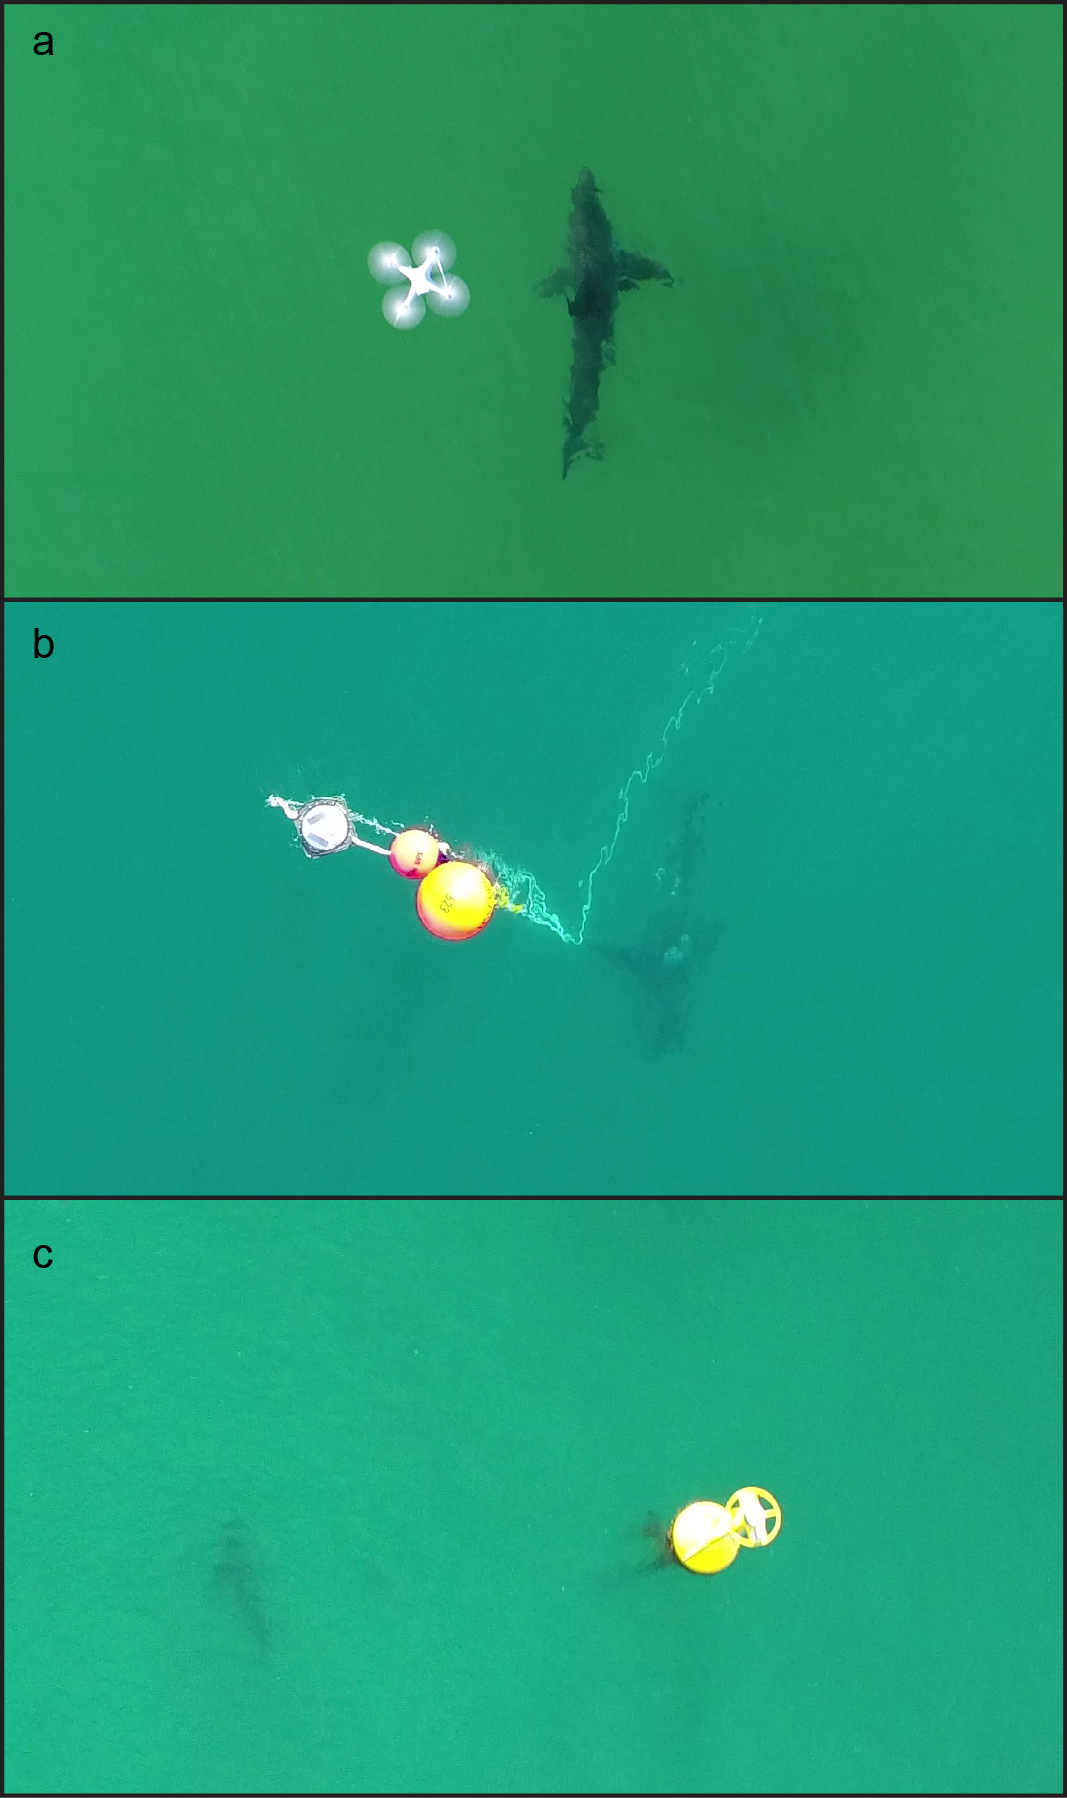 Shark mitigation method comparison